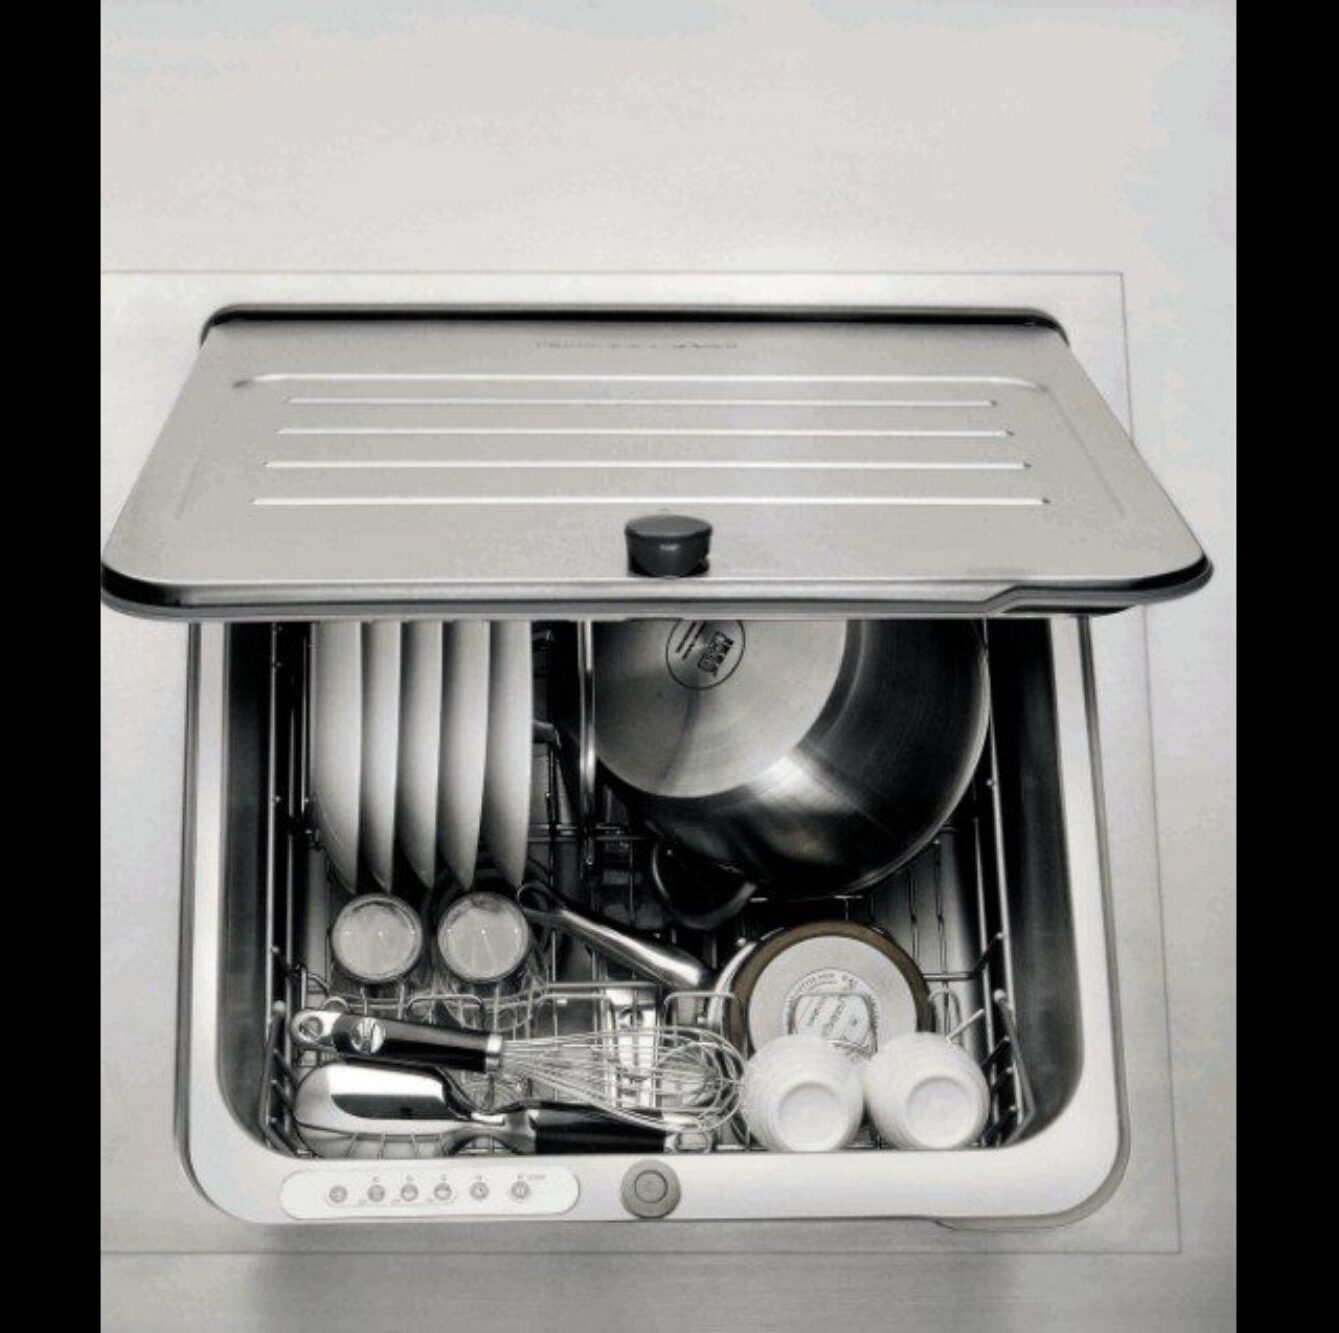 Top Loading Dishwasher